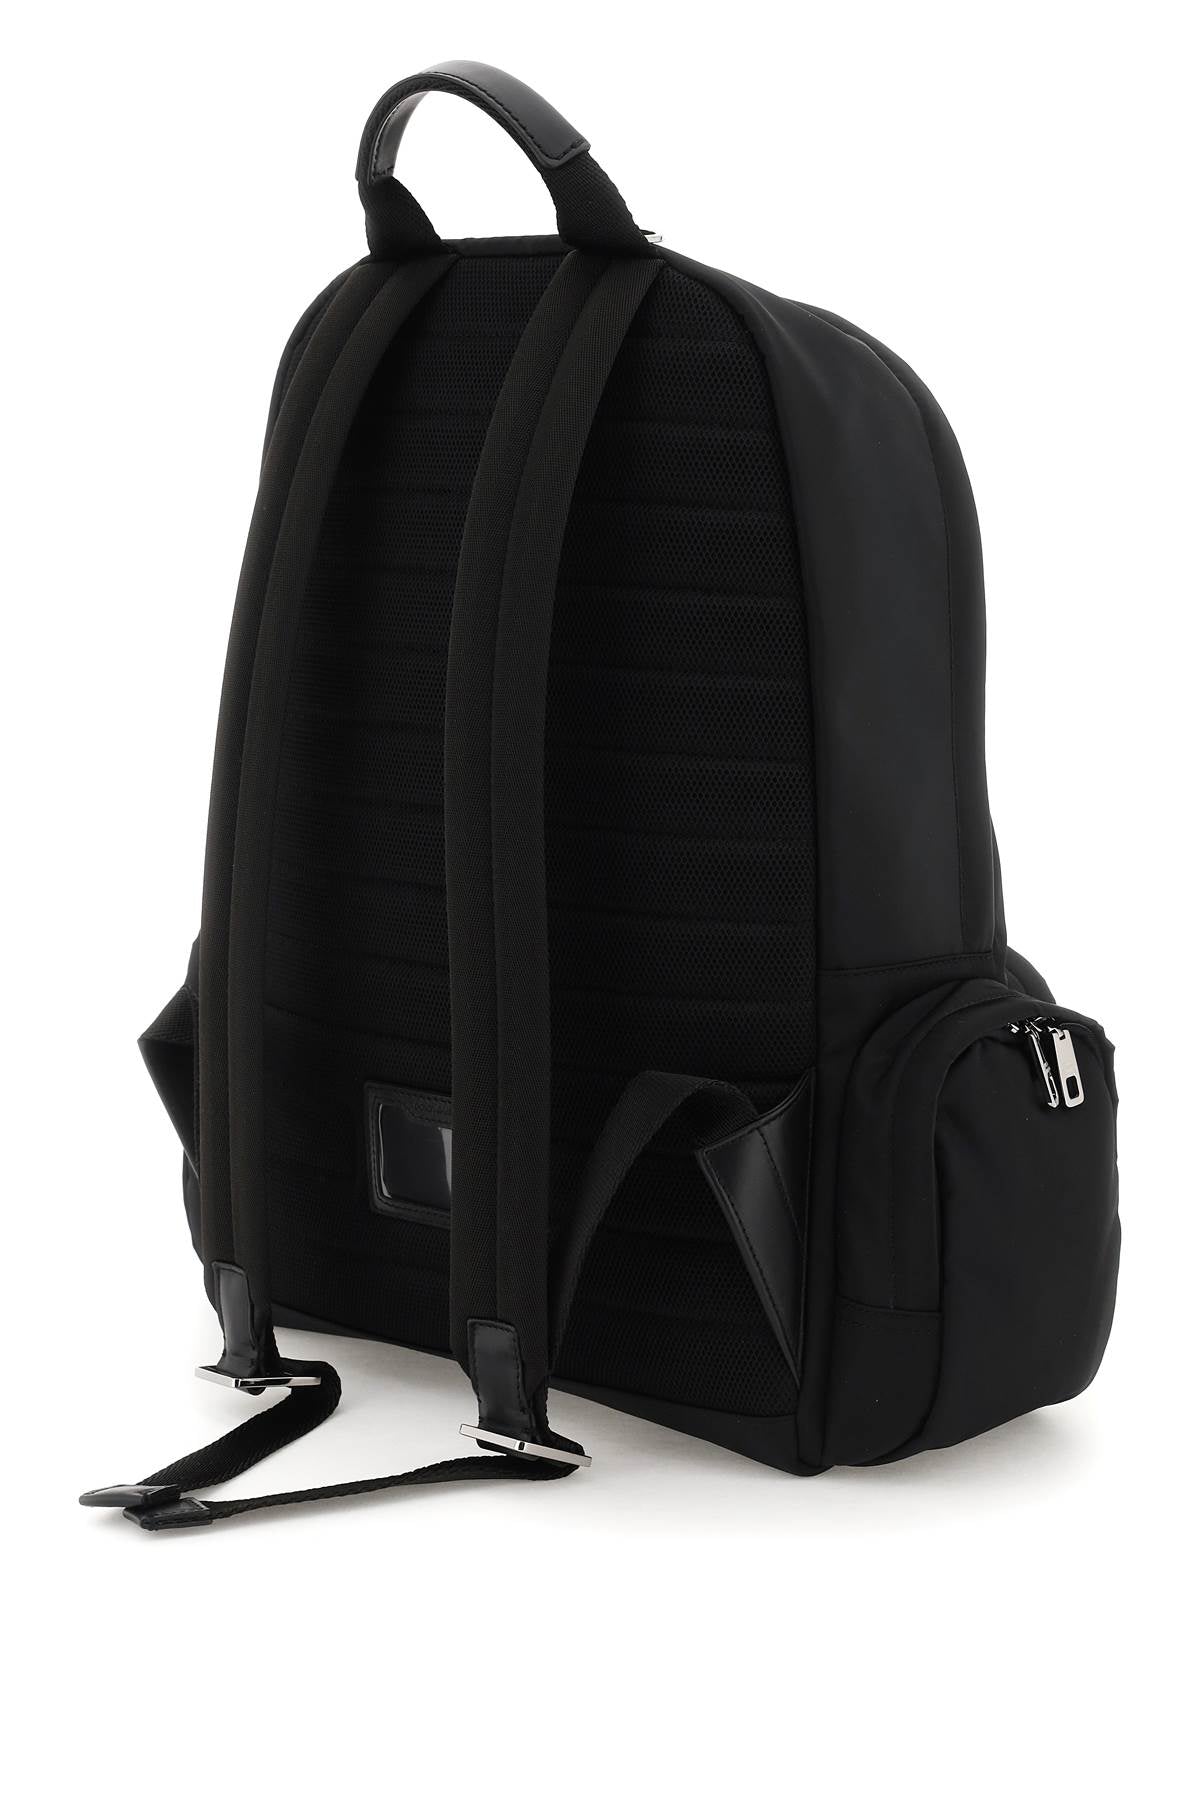 DOLCE & GABBANA Men's Nylon Backpack with Contrasting Logo by Luxury Designer